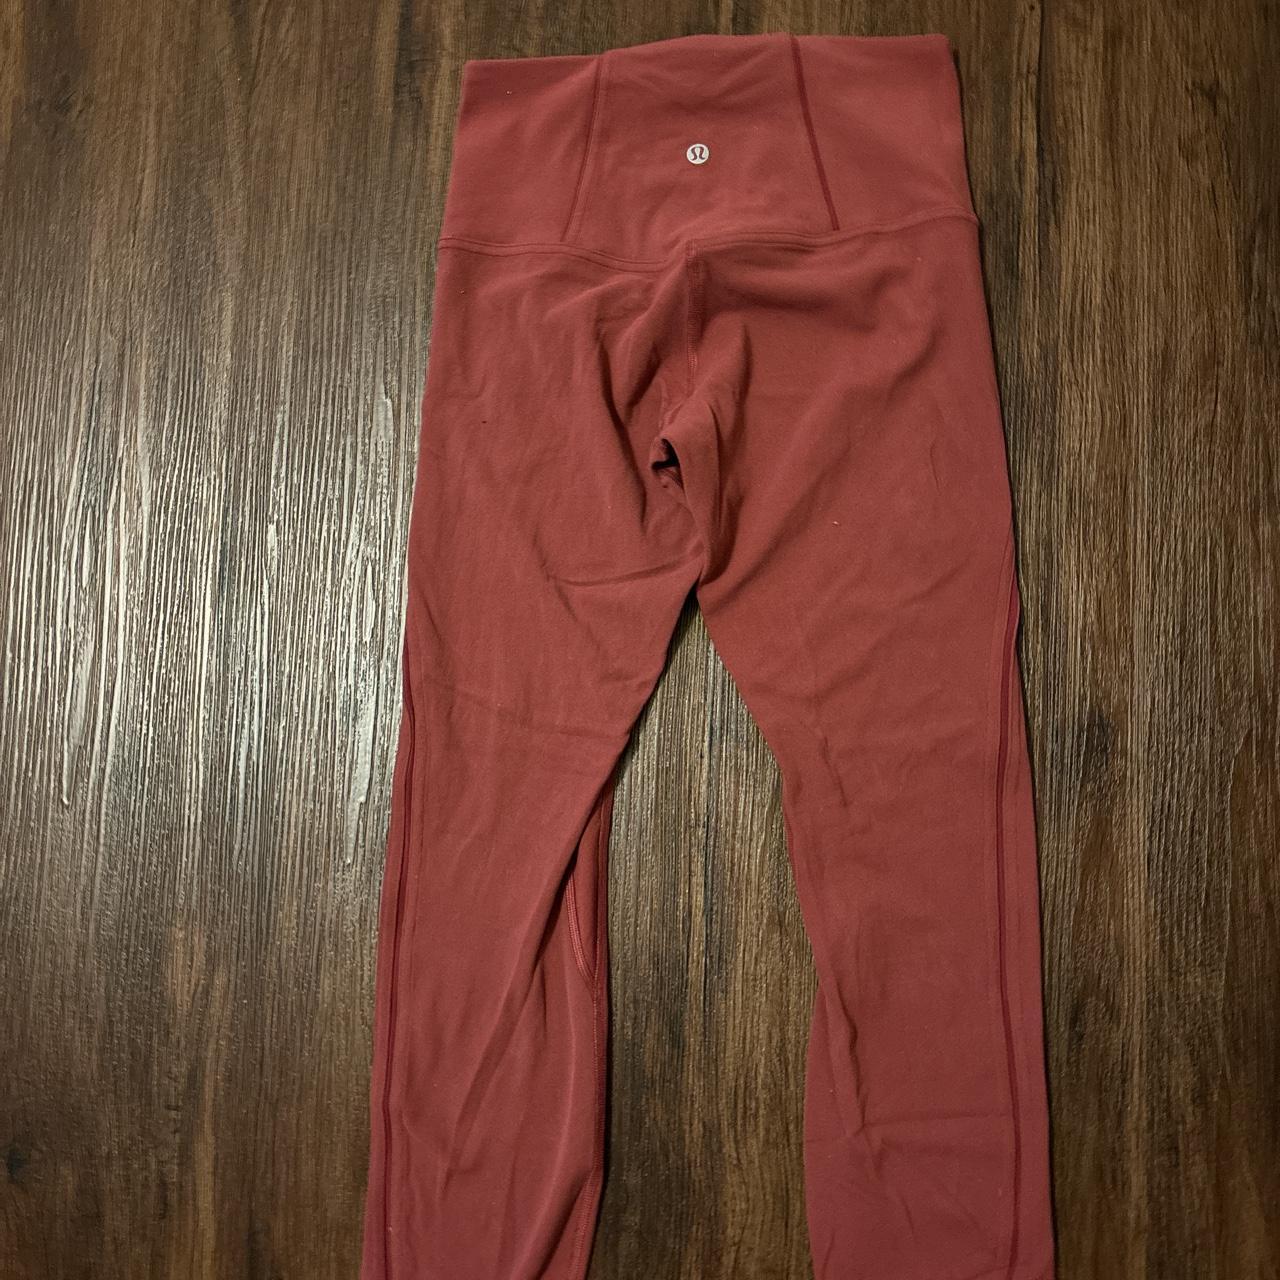 Lululemon fast and free leggings in red merlot size - Depop